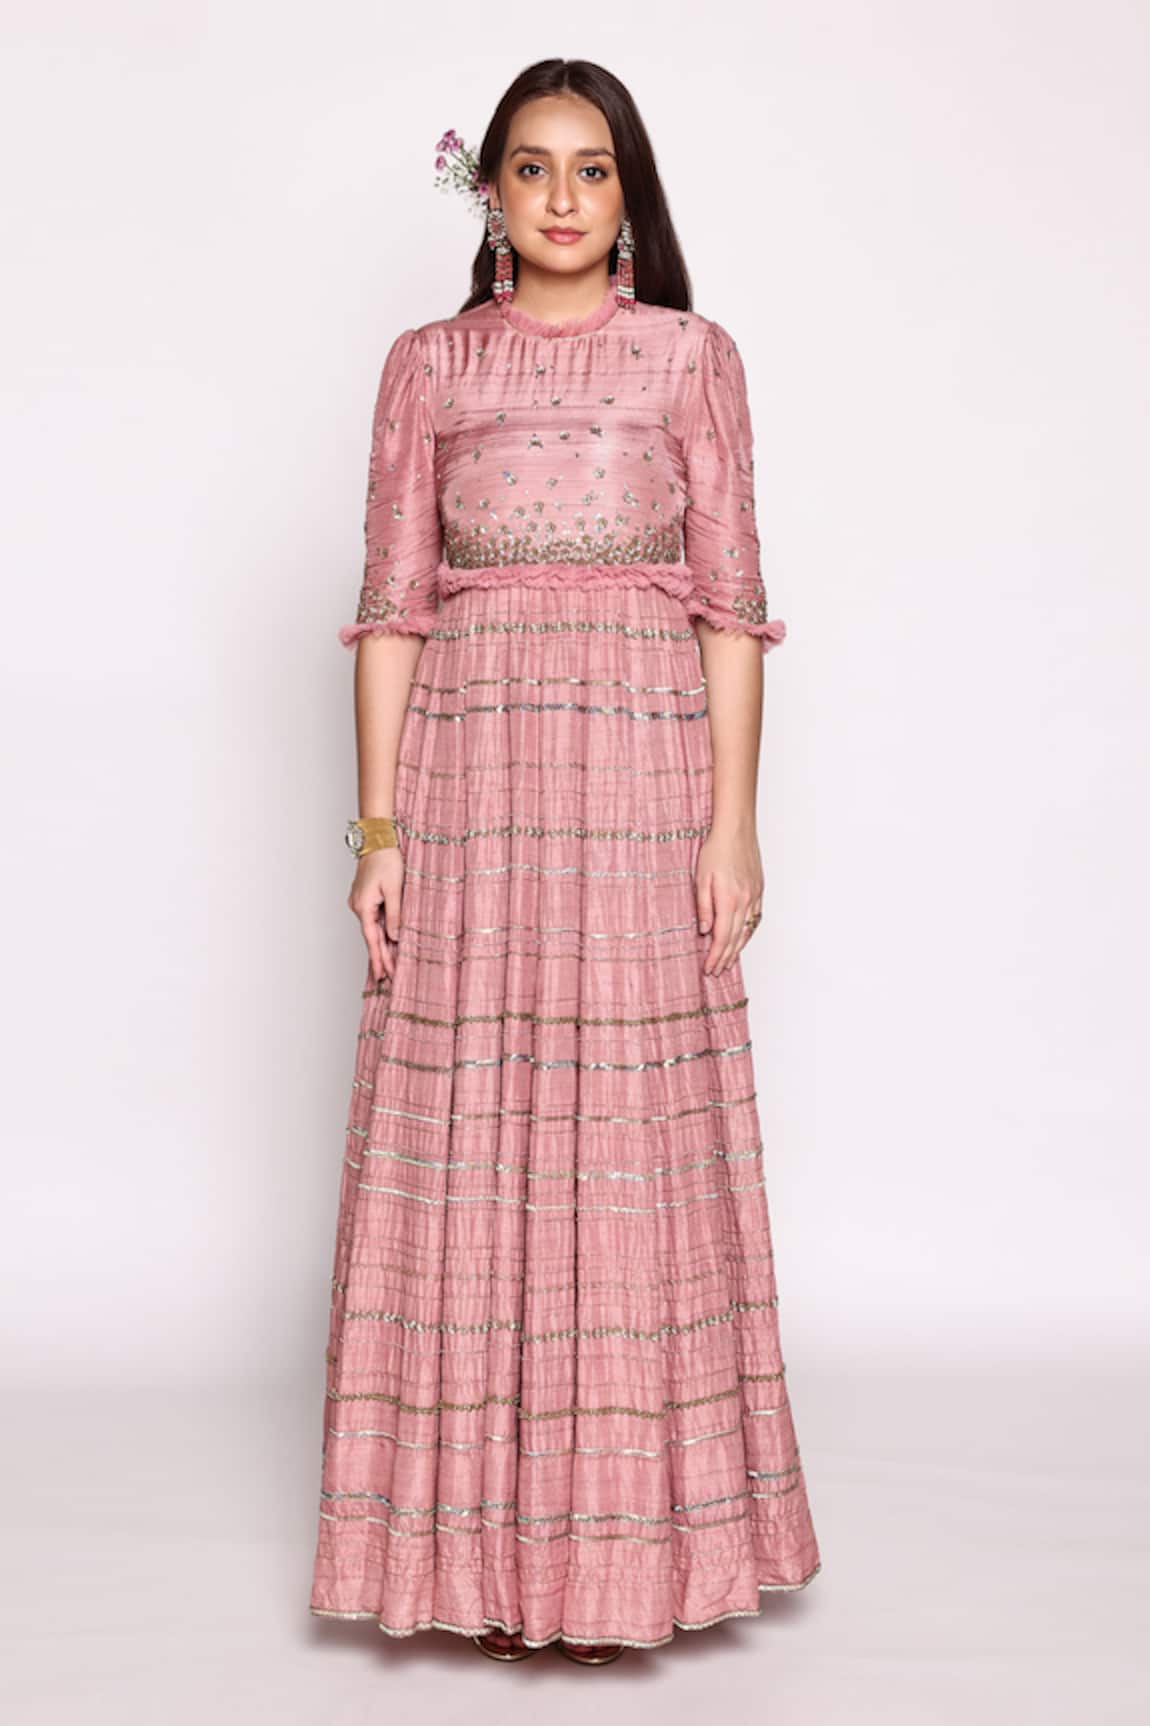 ABSTRACT BY MEGHA JAIN MADAAN Embellished Maxi Dress